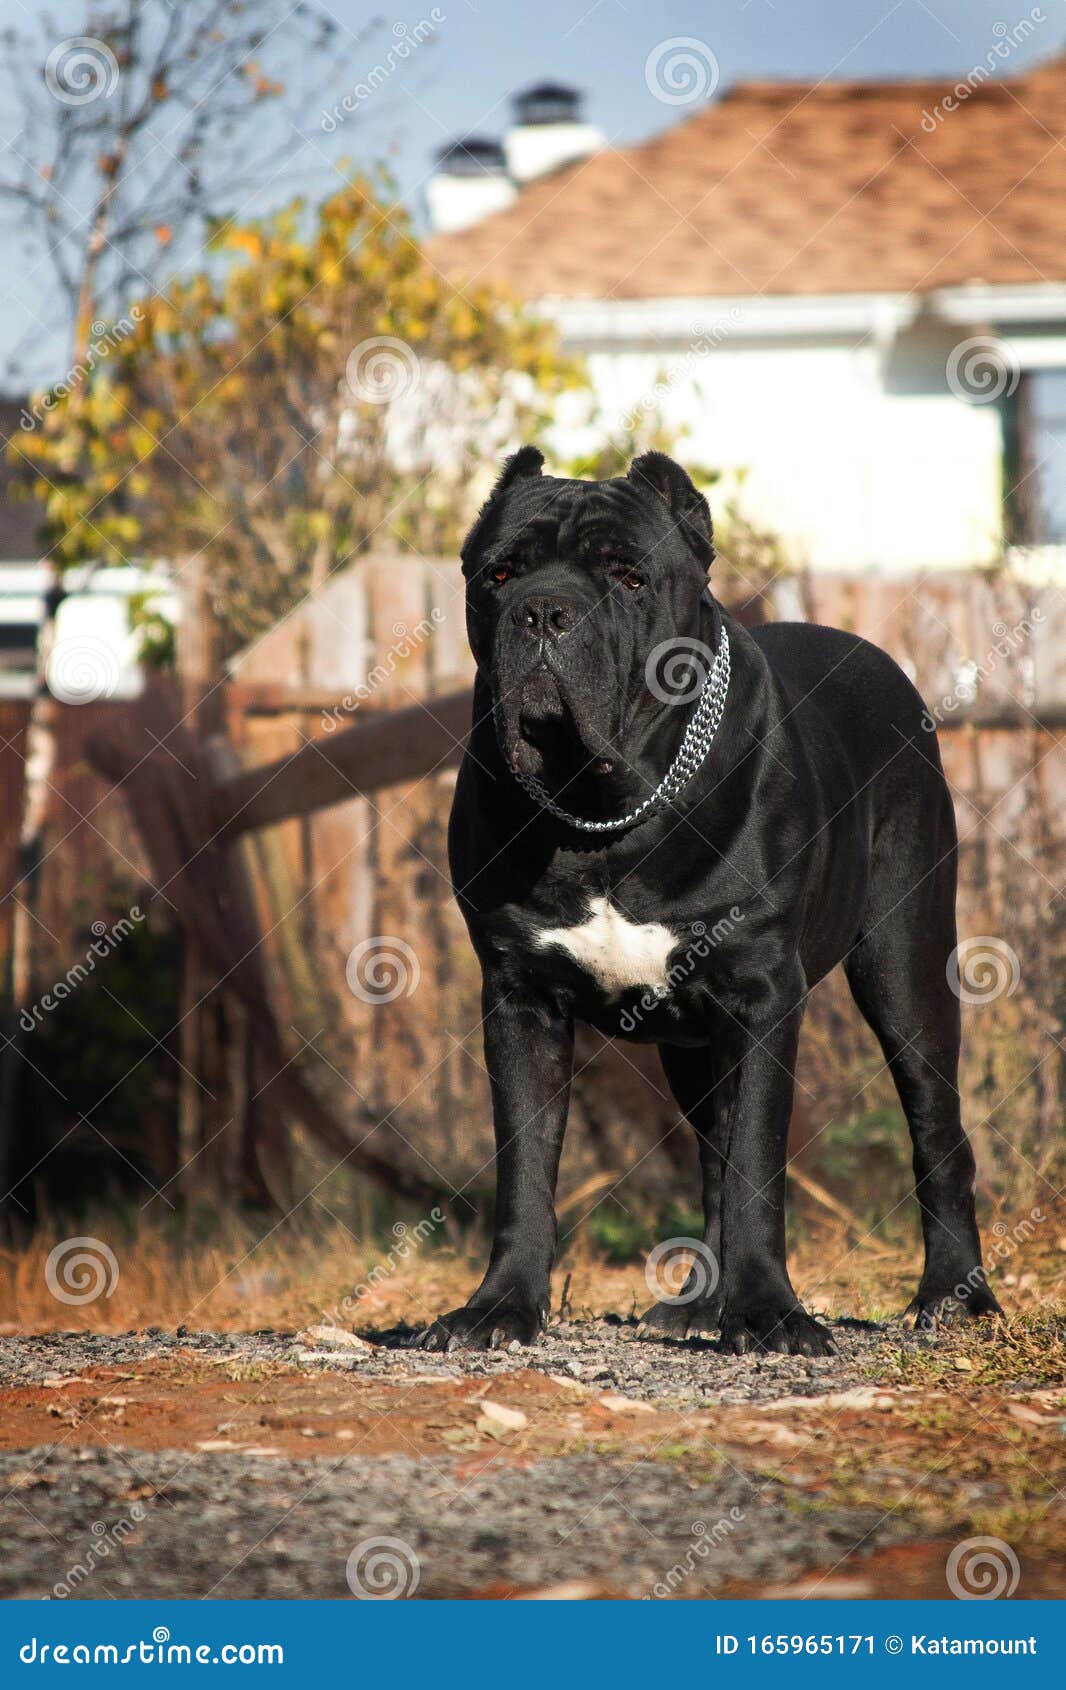 Beautiful Big Black Dog Breed Italian Cane Corso On The Background Of The House Stock Image Image Of Pedigree Black 165965171